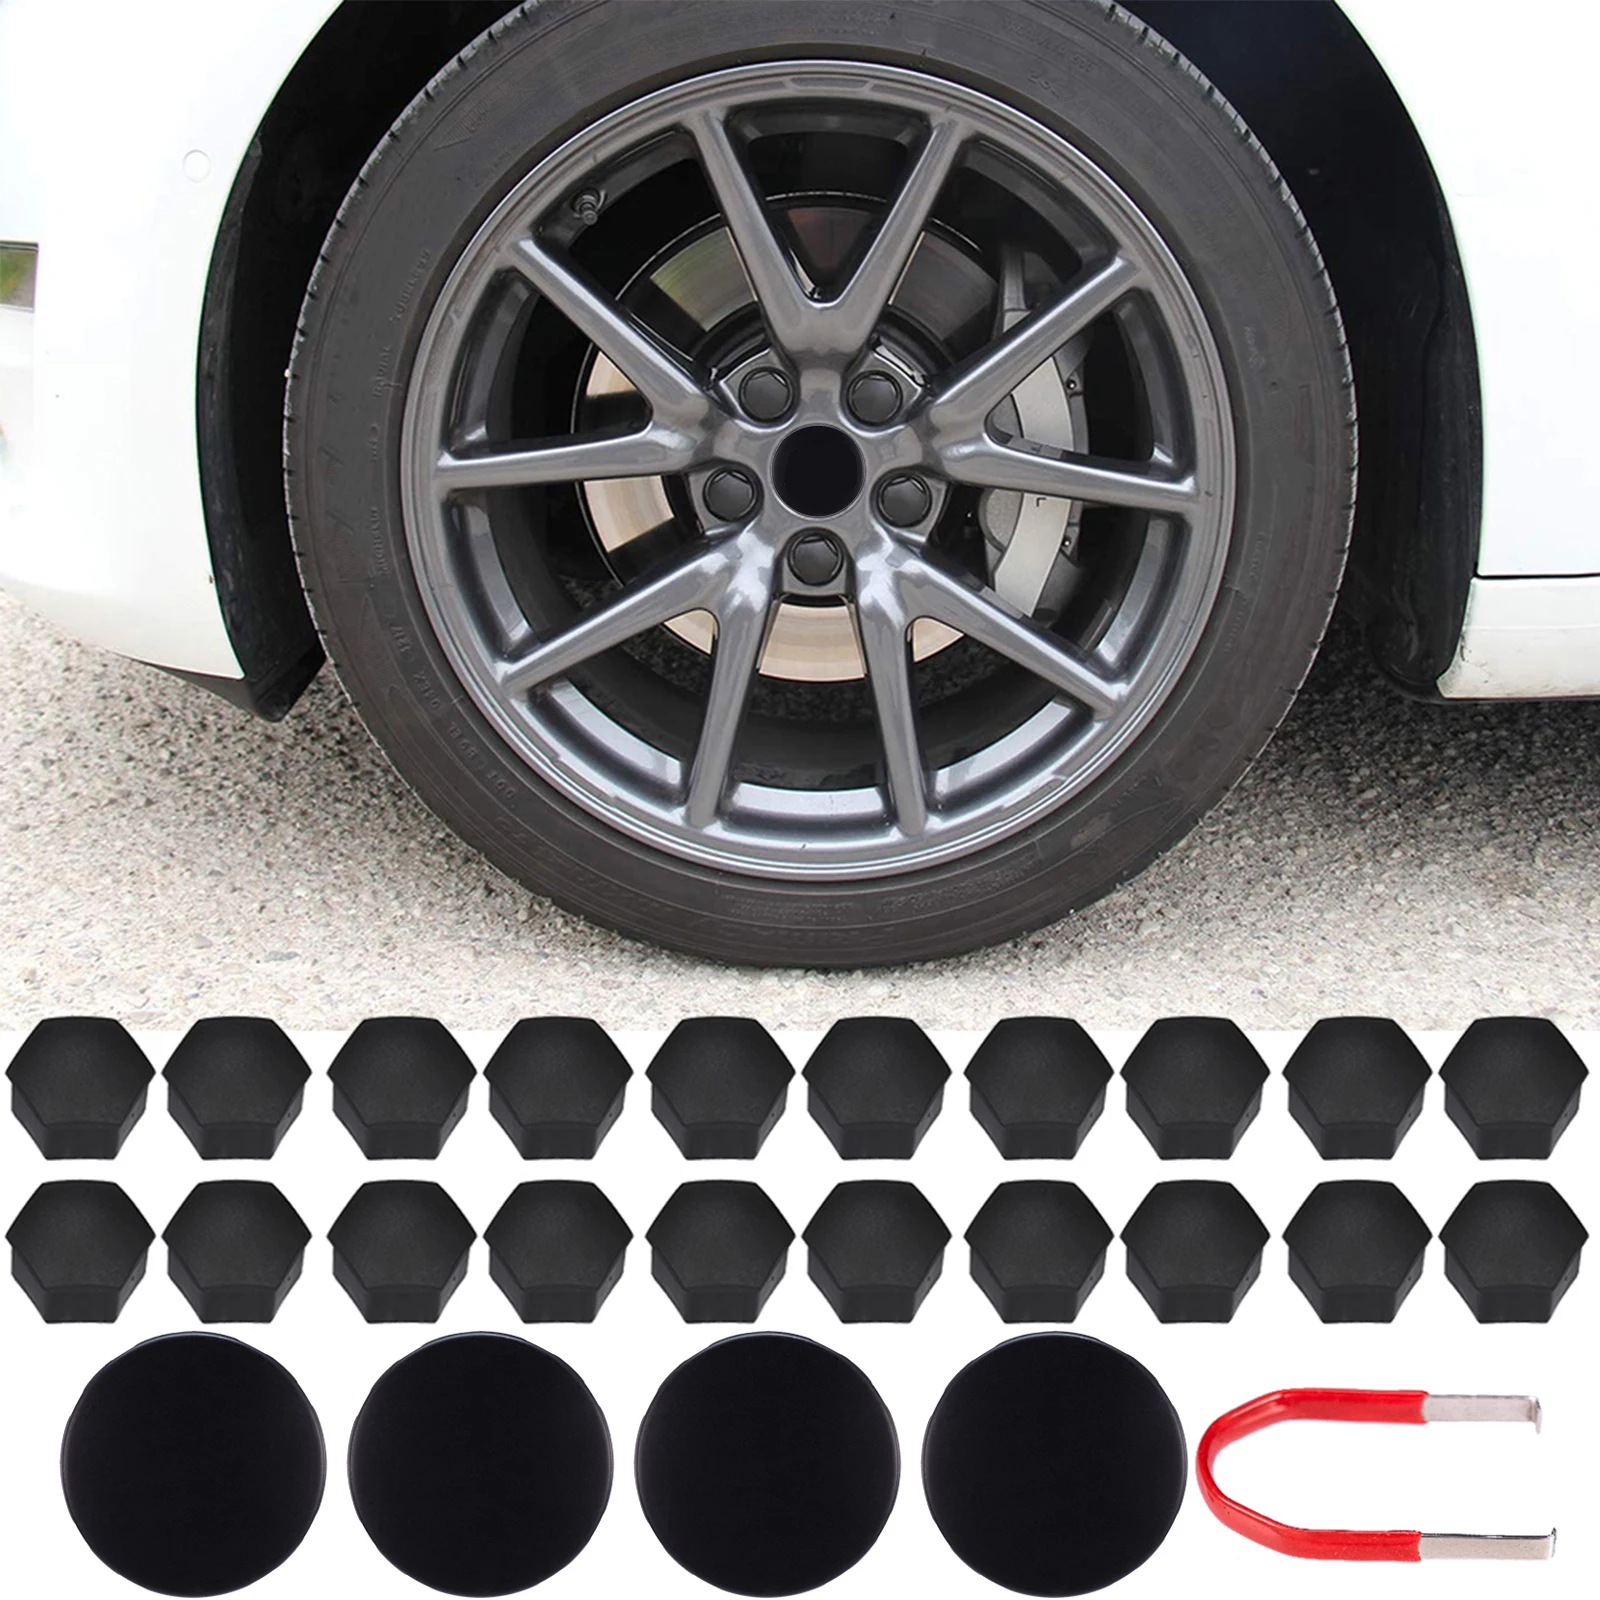 Zhongyu Black & Red Car Wheel Center Cap Kit Compatible for Tesla 3 S & X 20 Lug Nut Covers 4 Hub Center Caps 